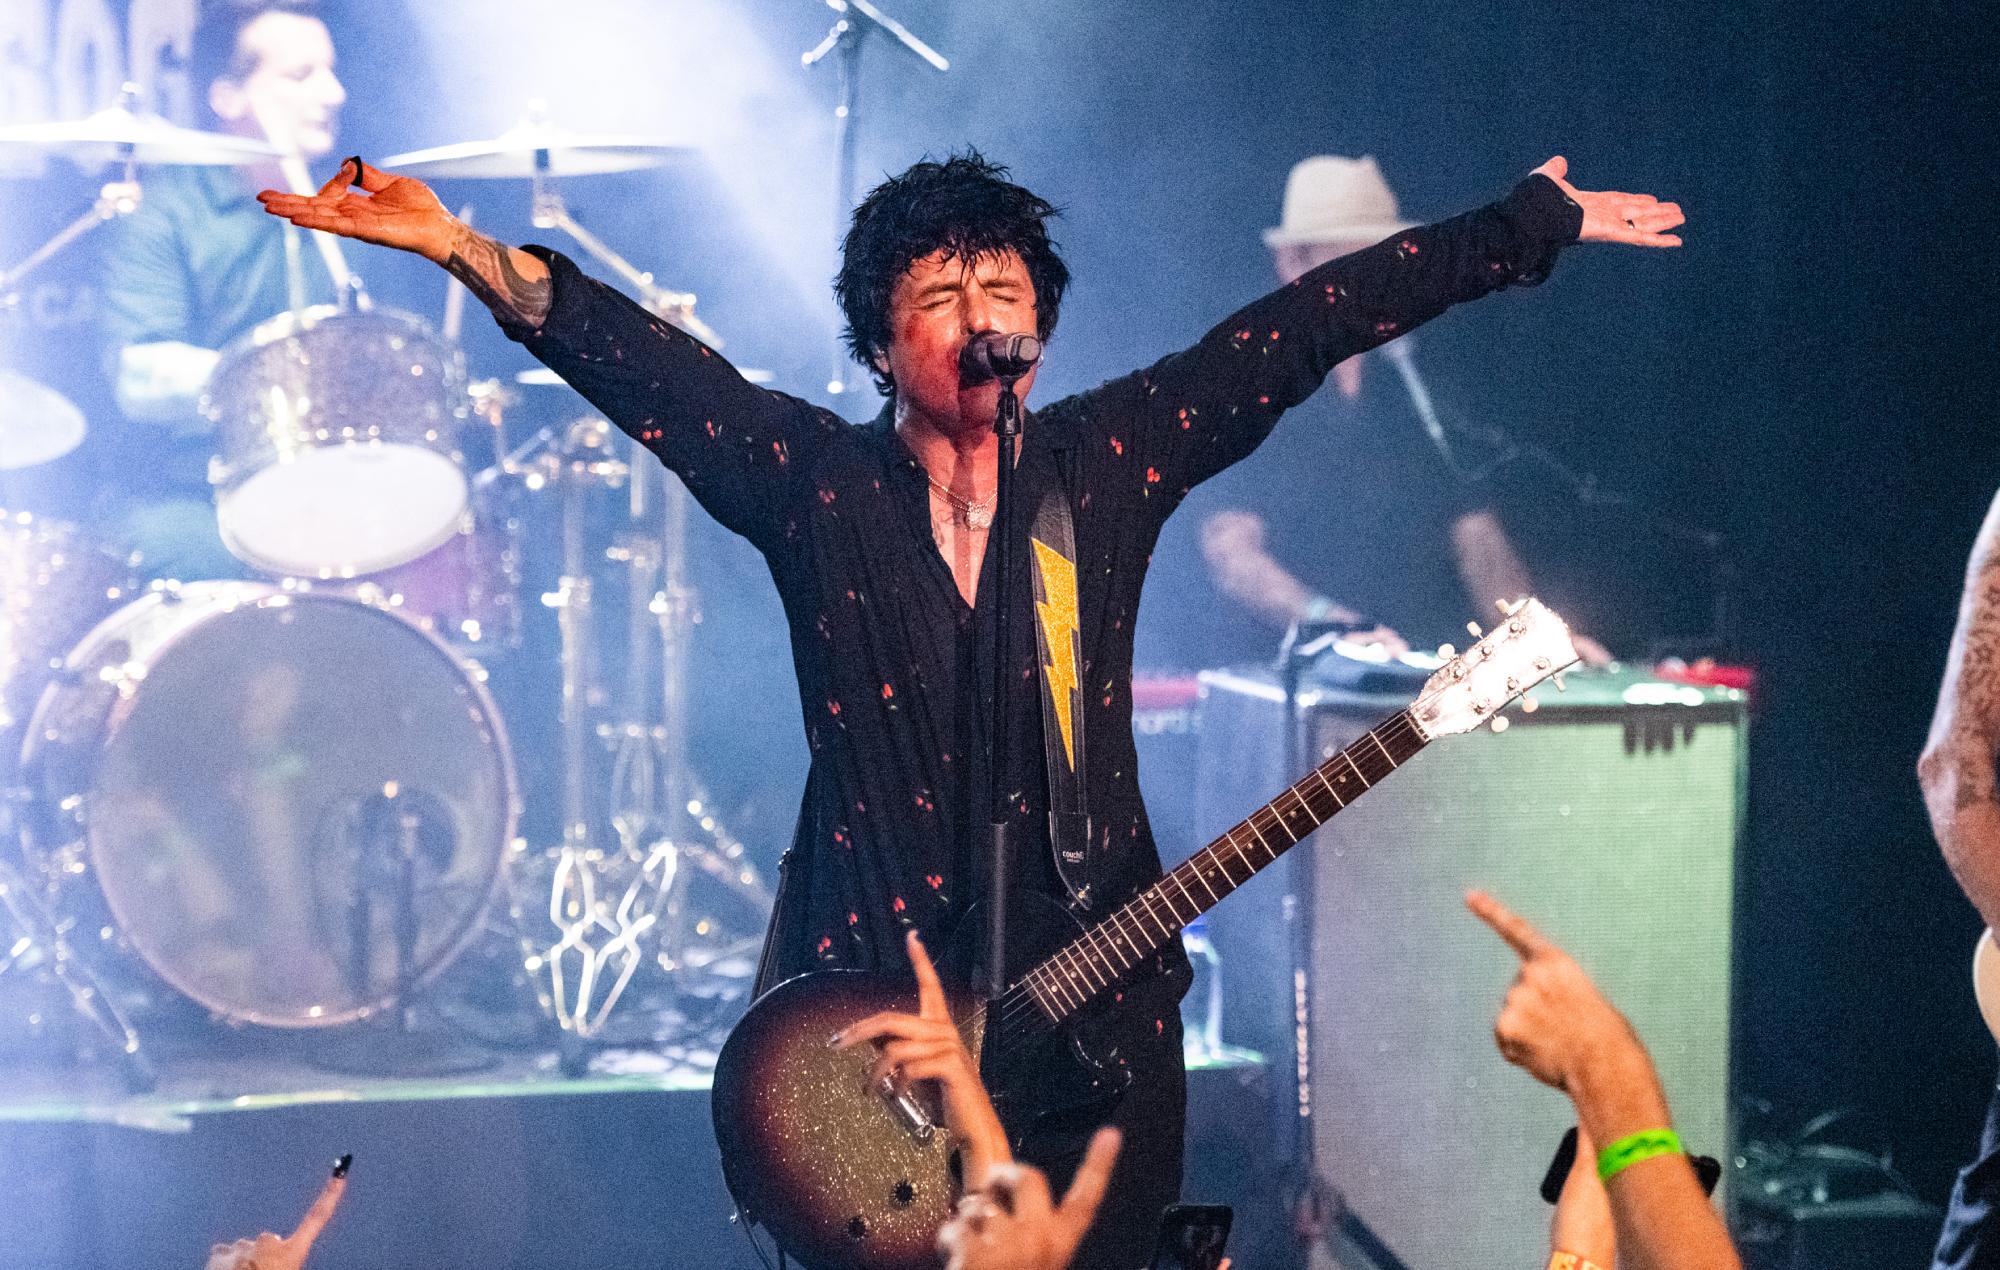 Un fanático reimagina 'Good Riddance (Time Of Your Life)' de Green Day si hubiera estado en 'Dookie'